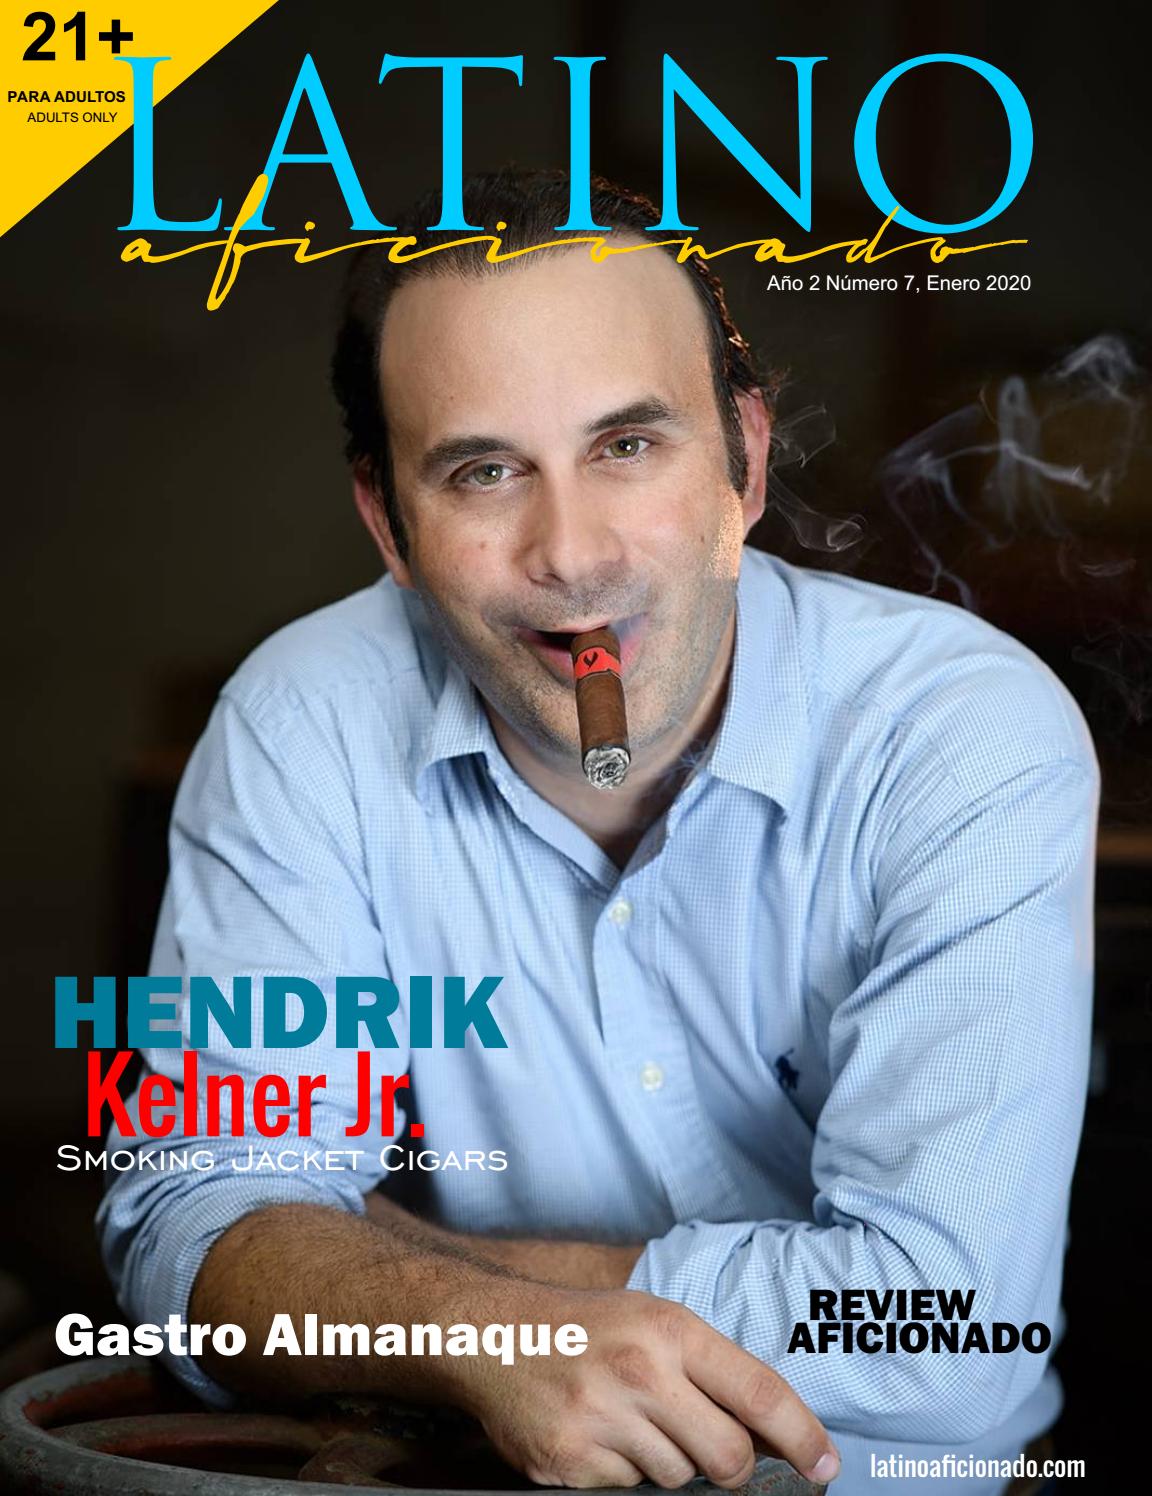 Latino Aficionado Cigar Magazine cover pages – The CigarMonkeys